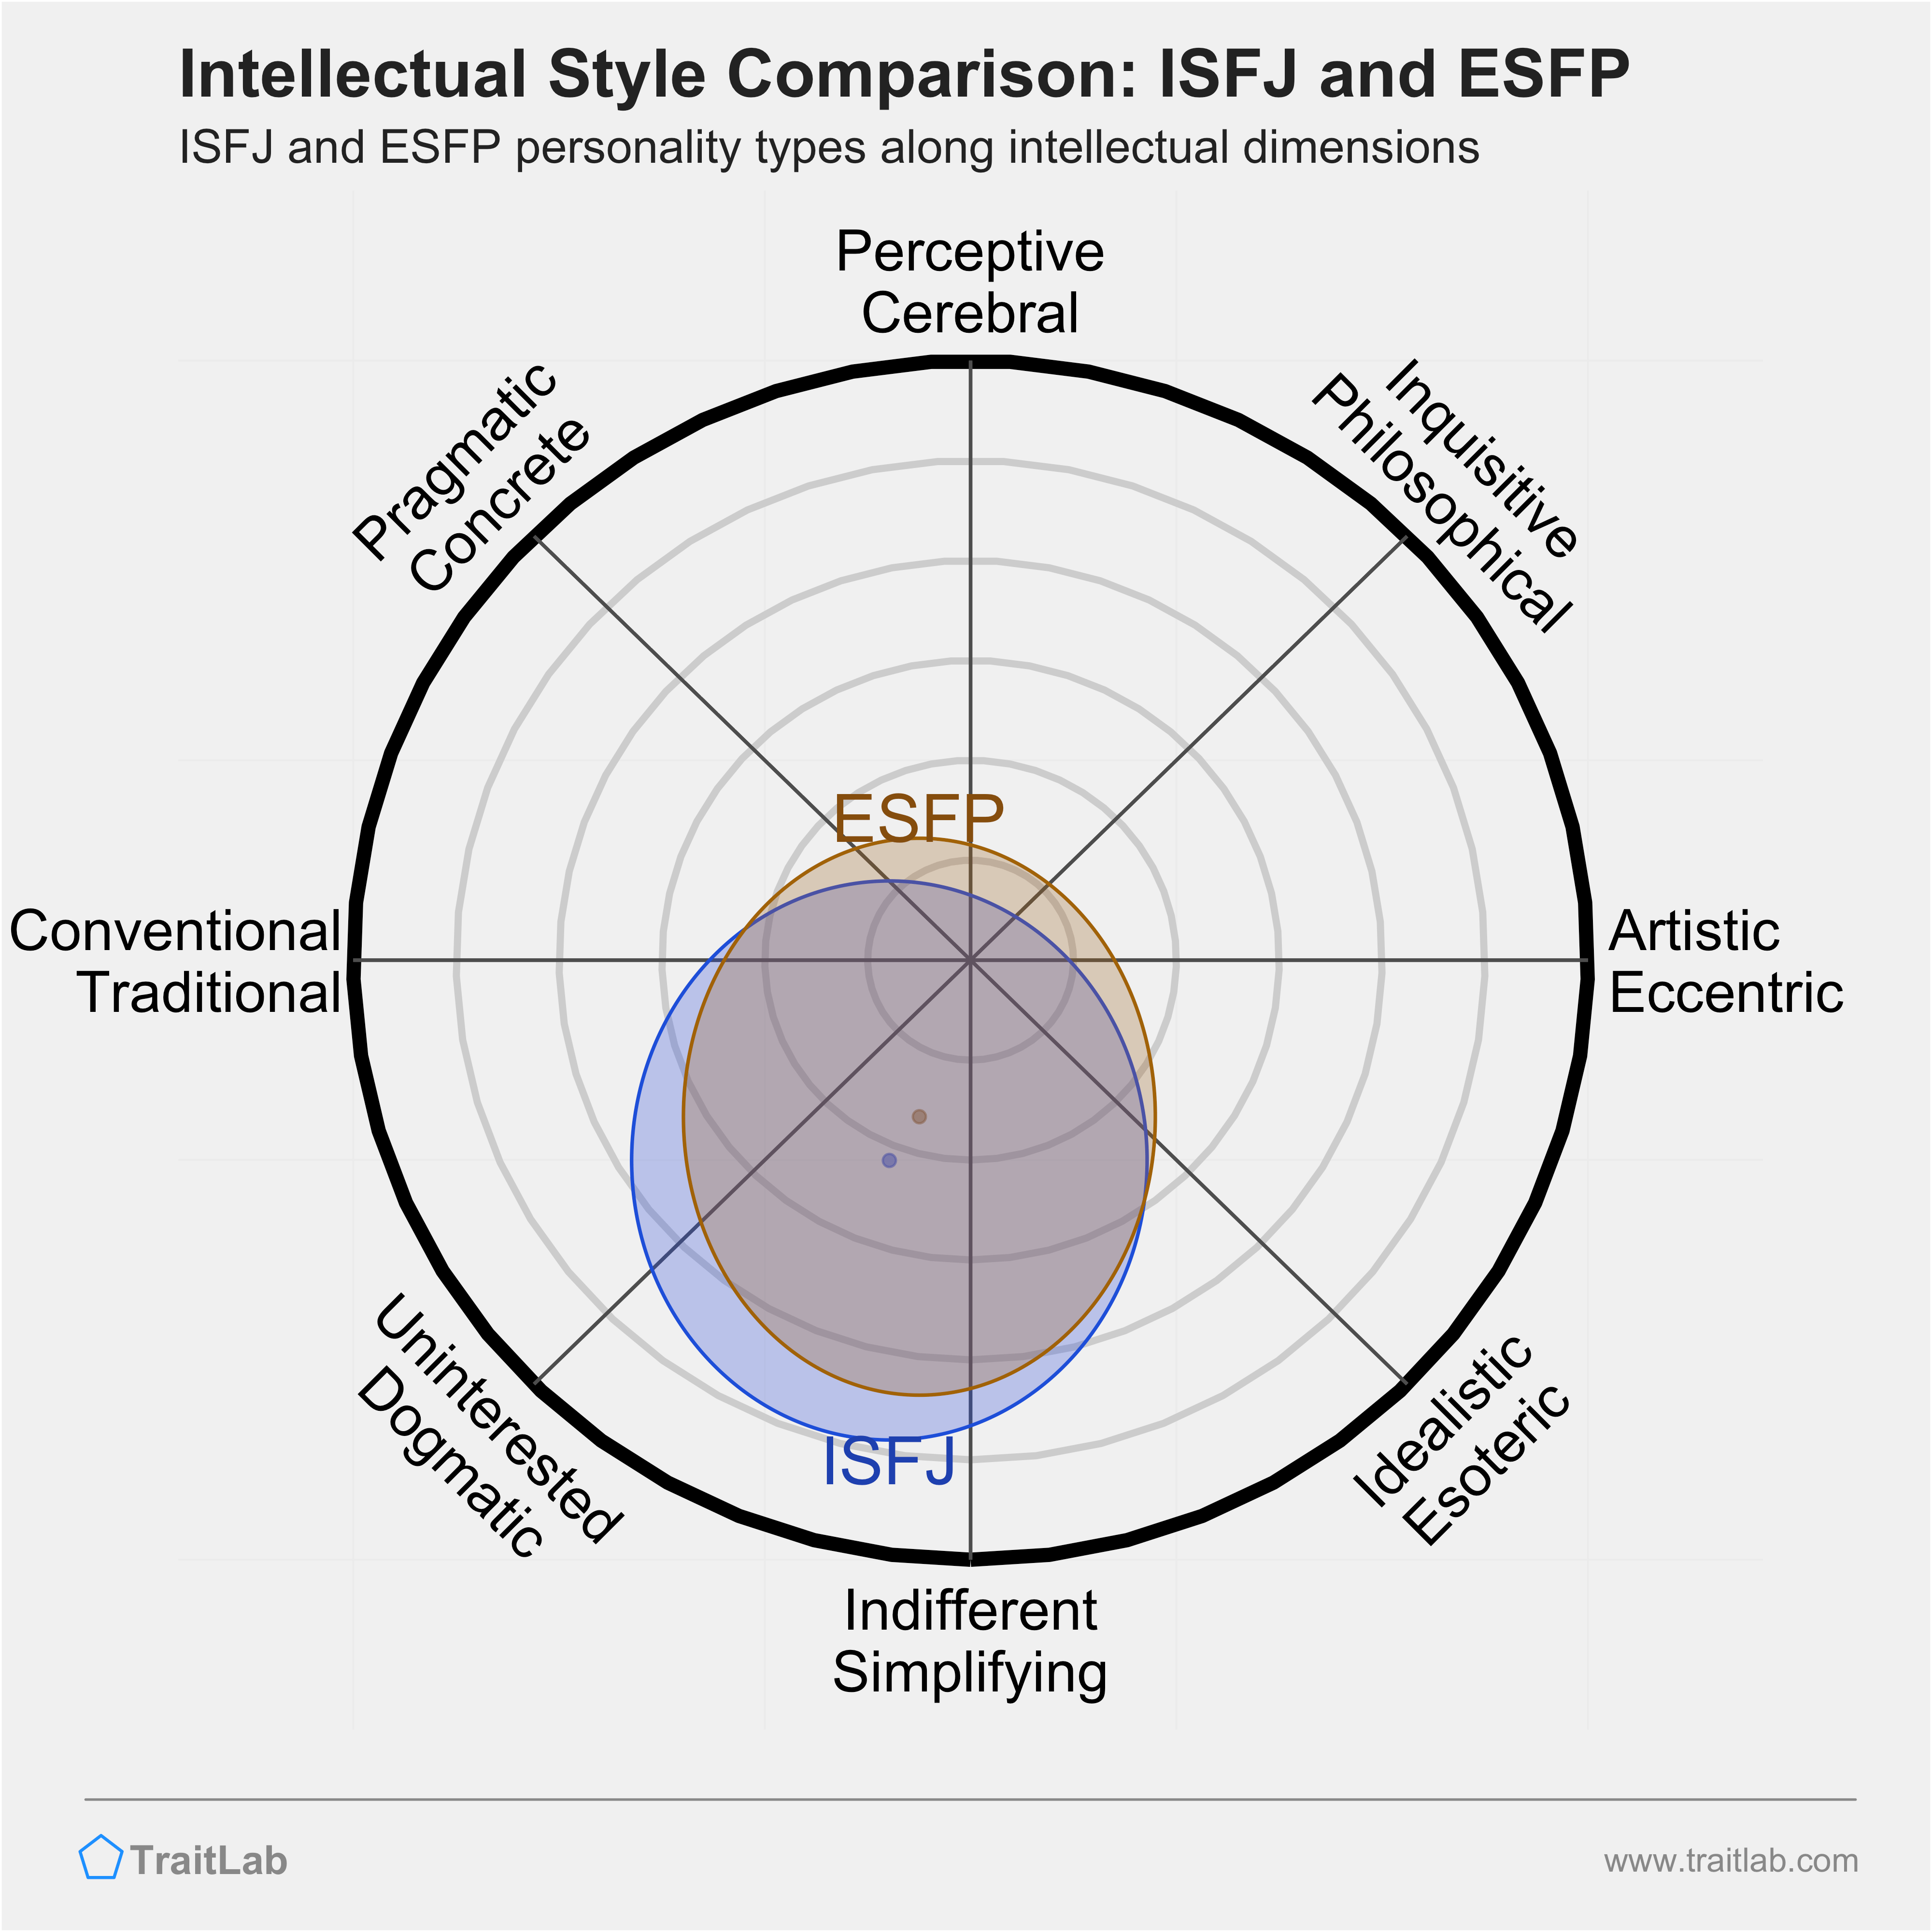 ISFJ and ESFP comparison across intellectual dimensions